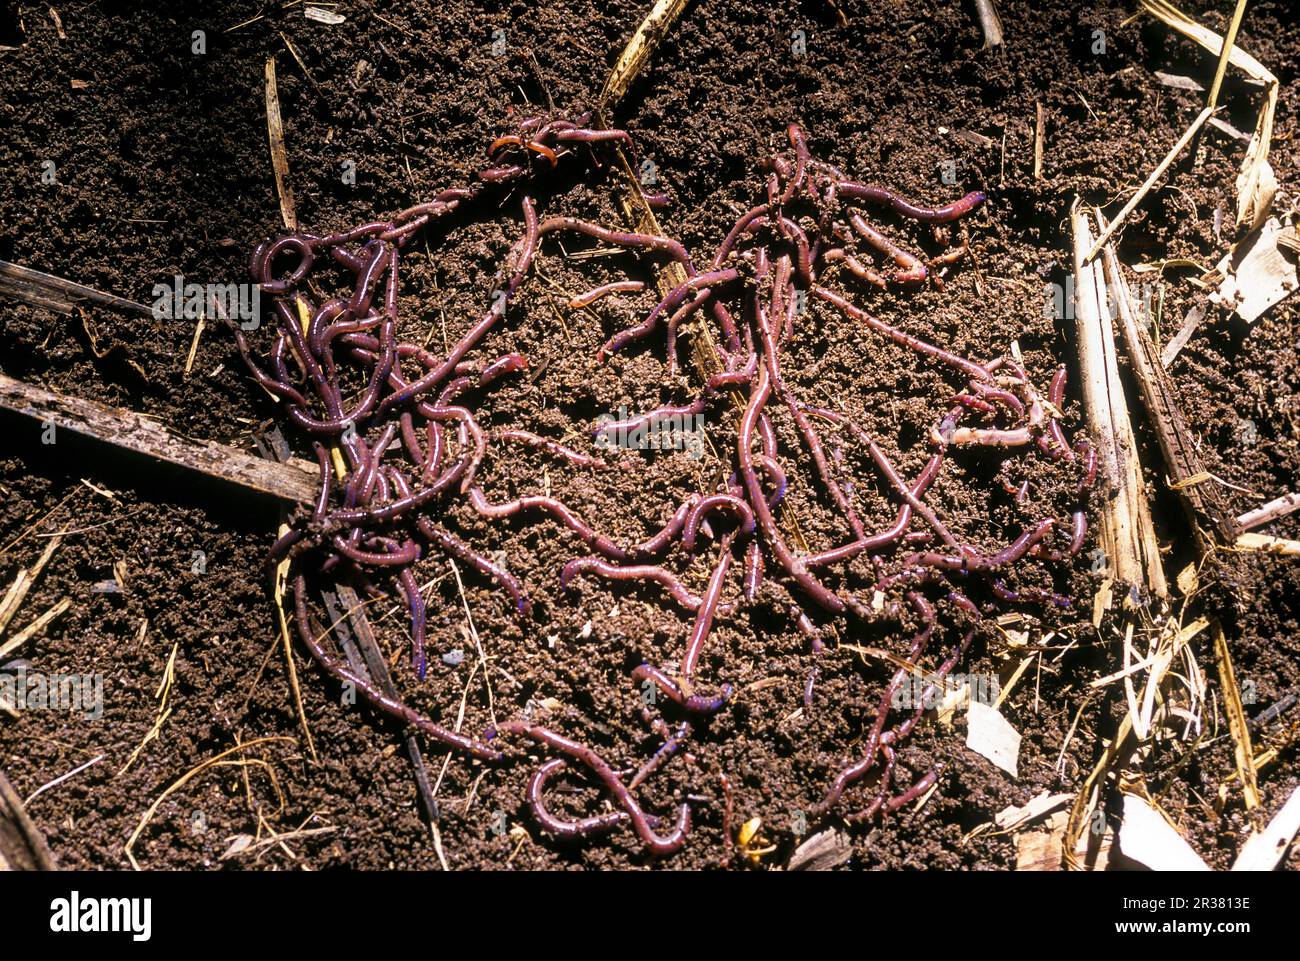 Earth worms in a vermi compost yard, Organic Farming India Stock Photo